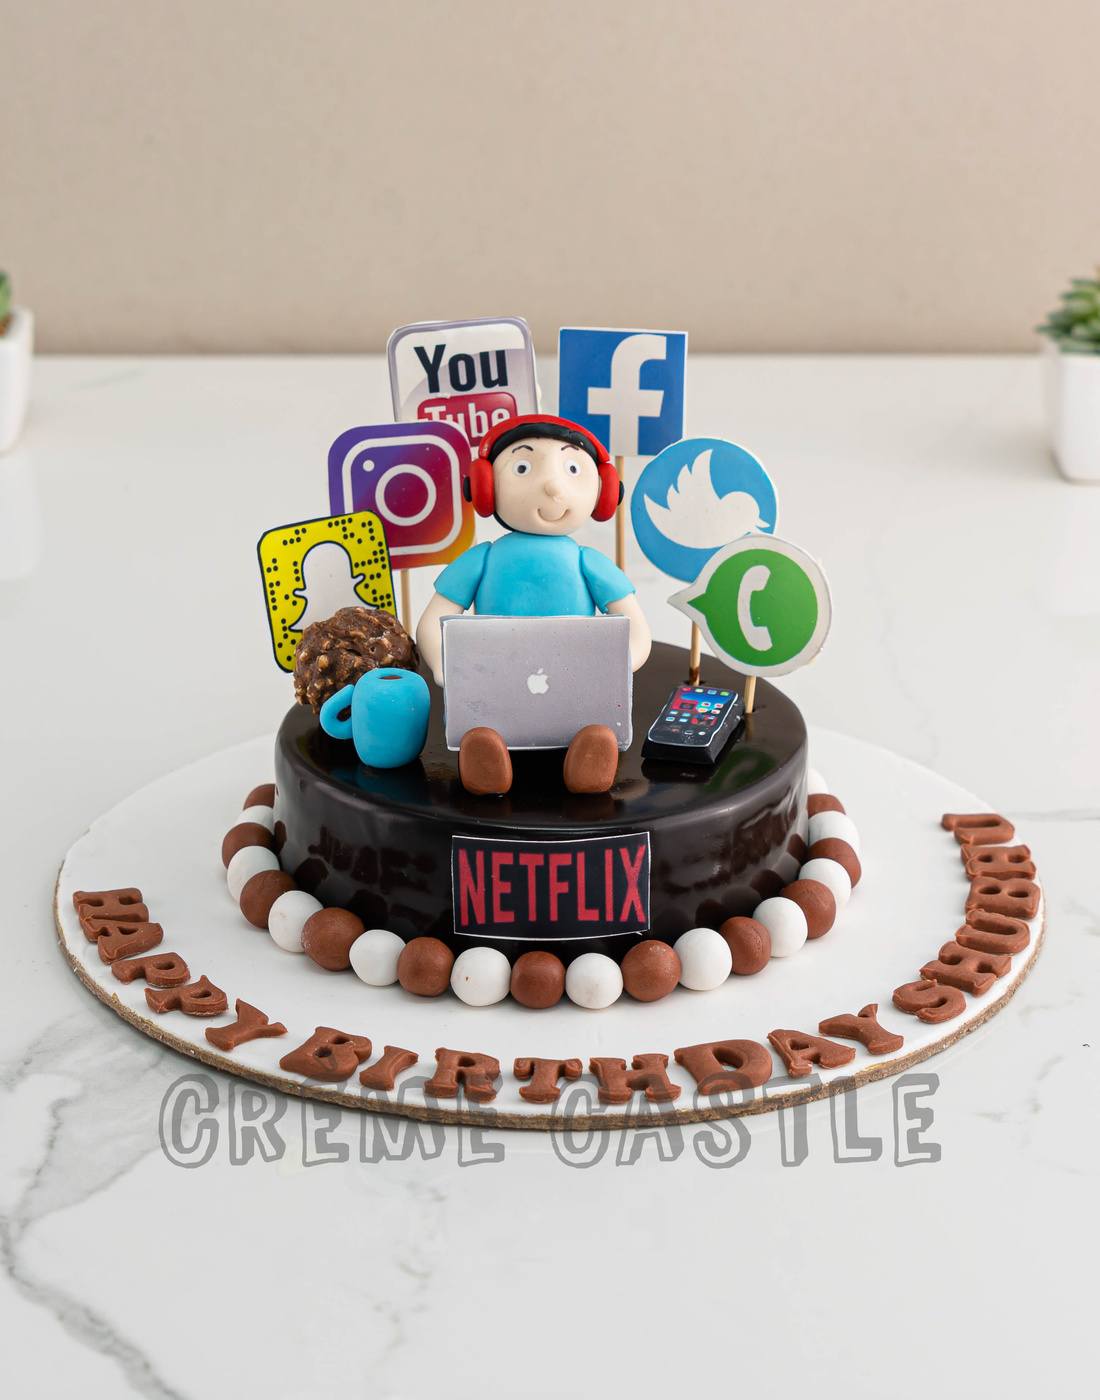 Social Media Lover Cake - Creme Castle